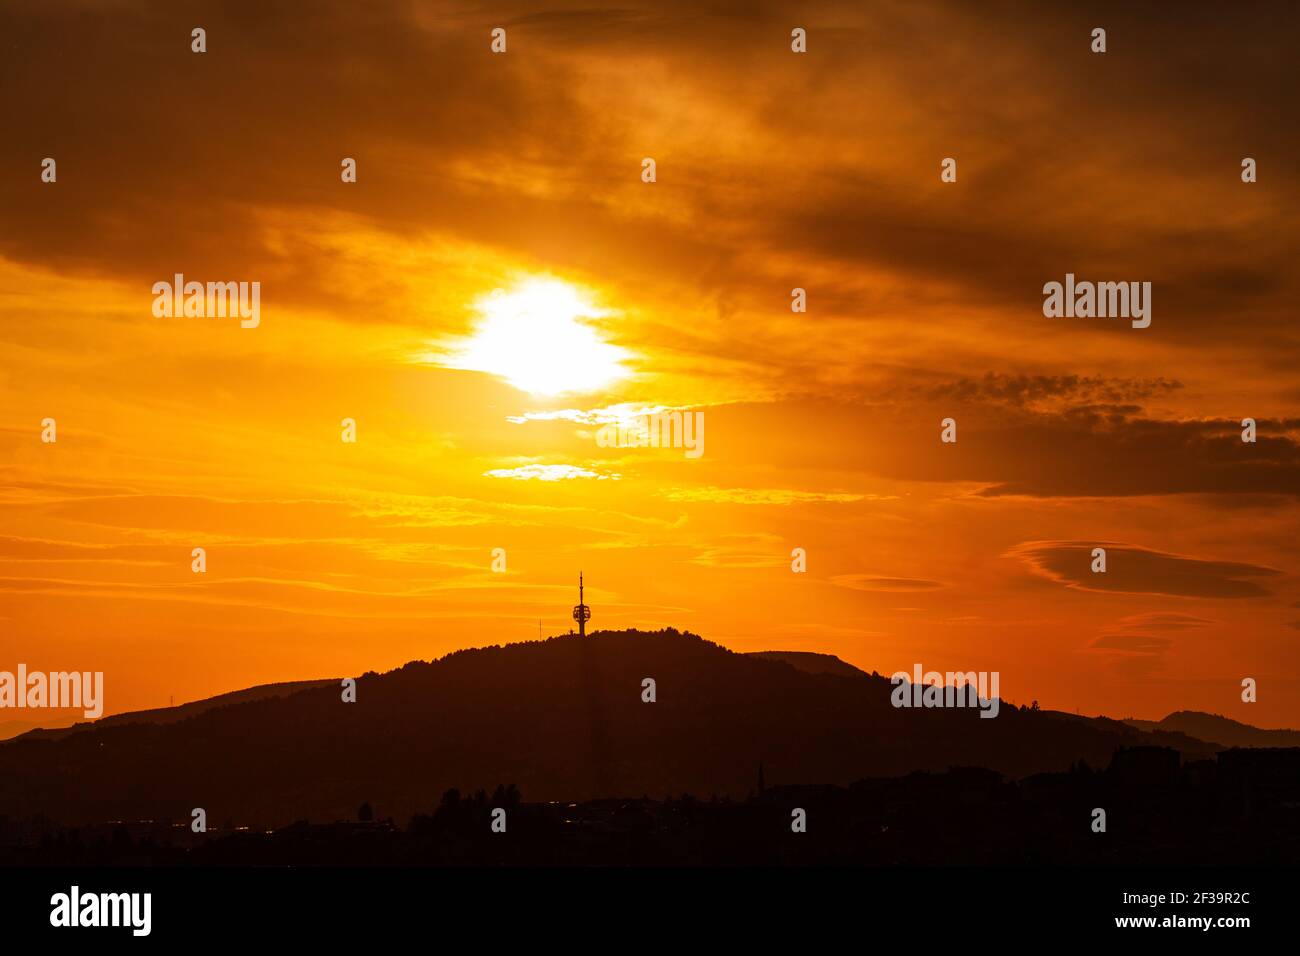 View of Hum Tower on Mount Hum during sunset, Sarajevo Stock Photo